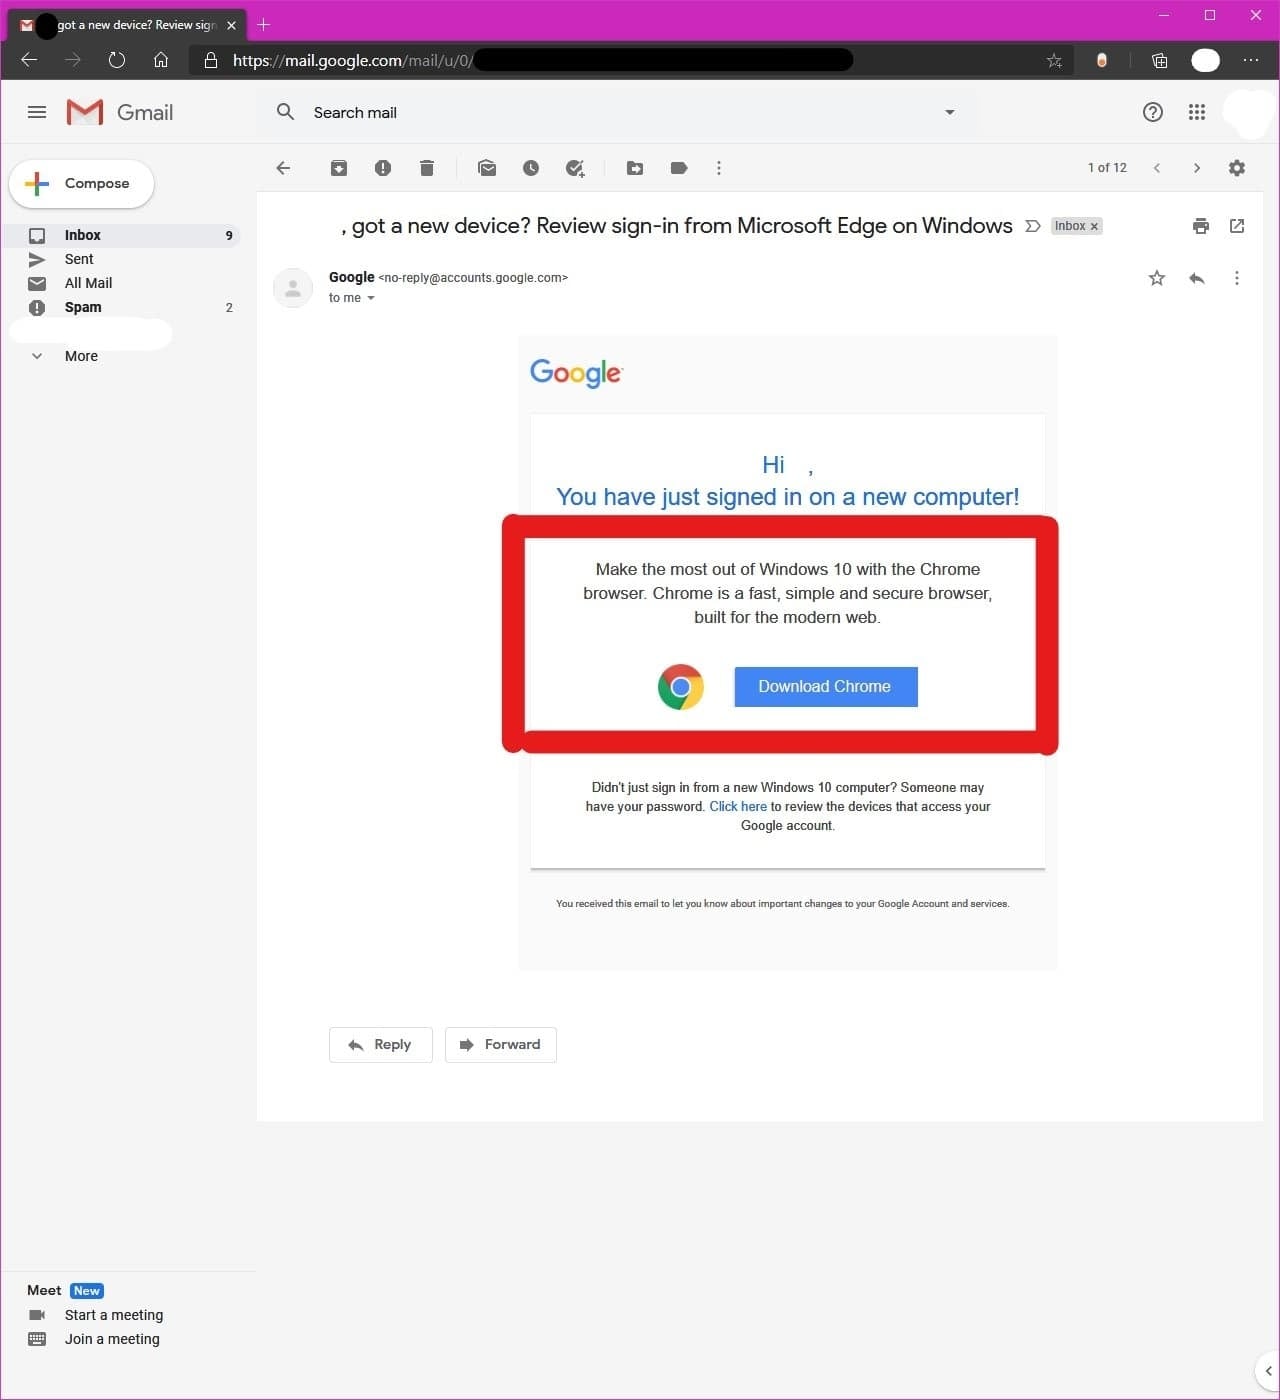 Gmail alert for downloading Chrome.